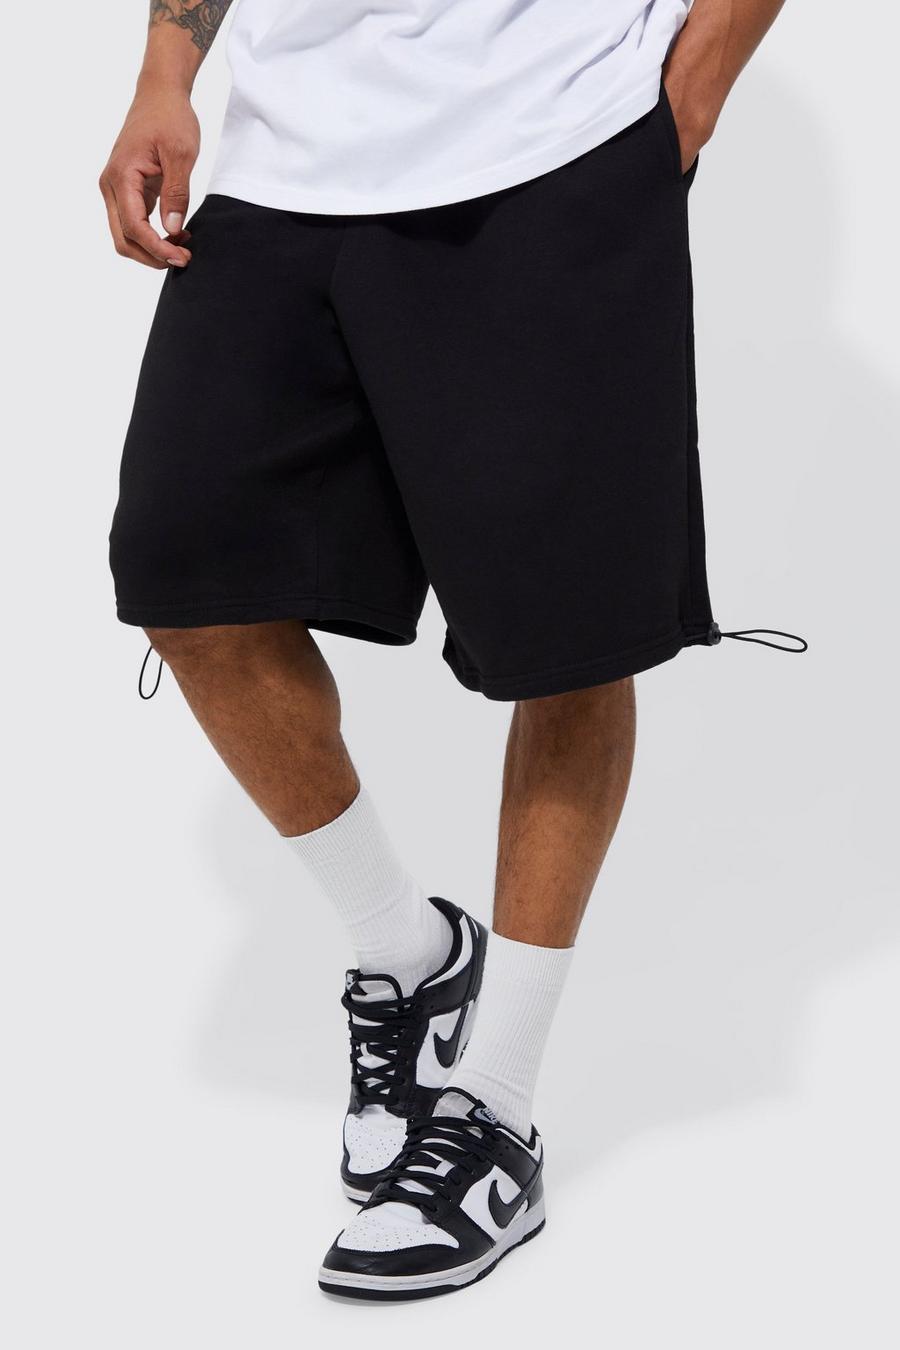 Parachute-Shorts aus Jersey, Black schwarz